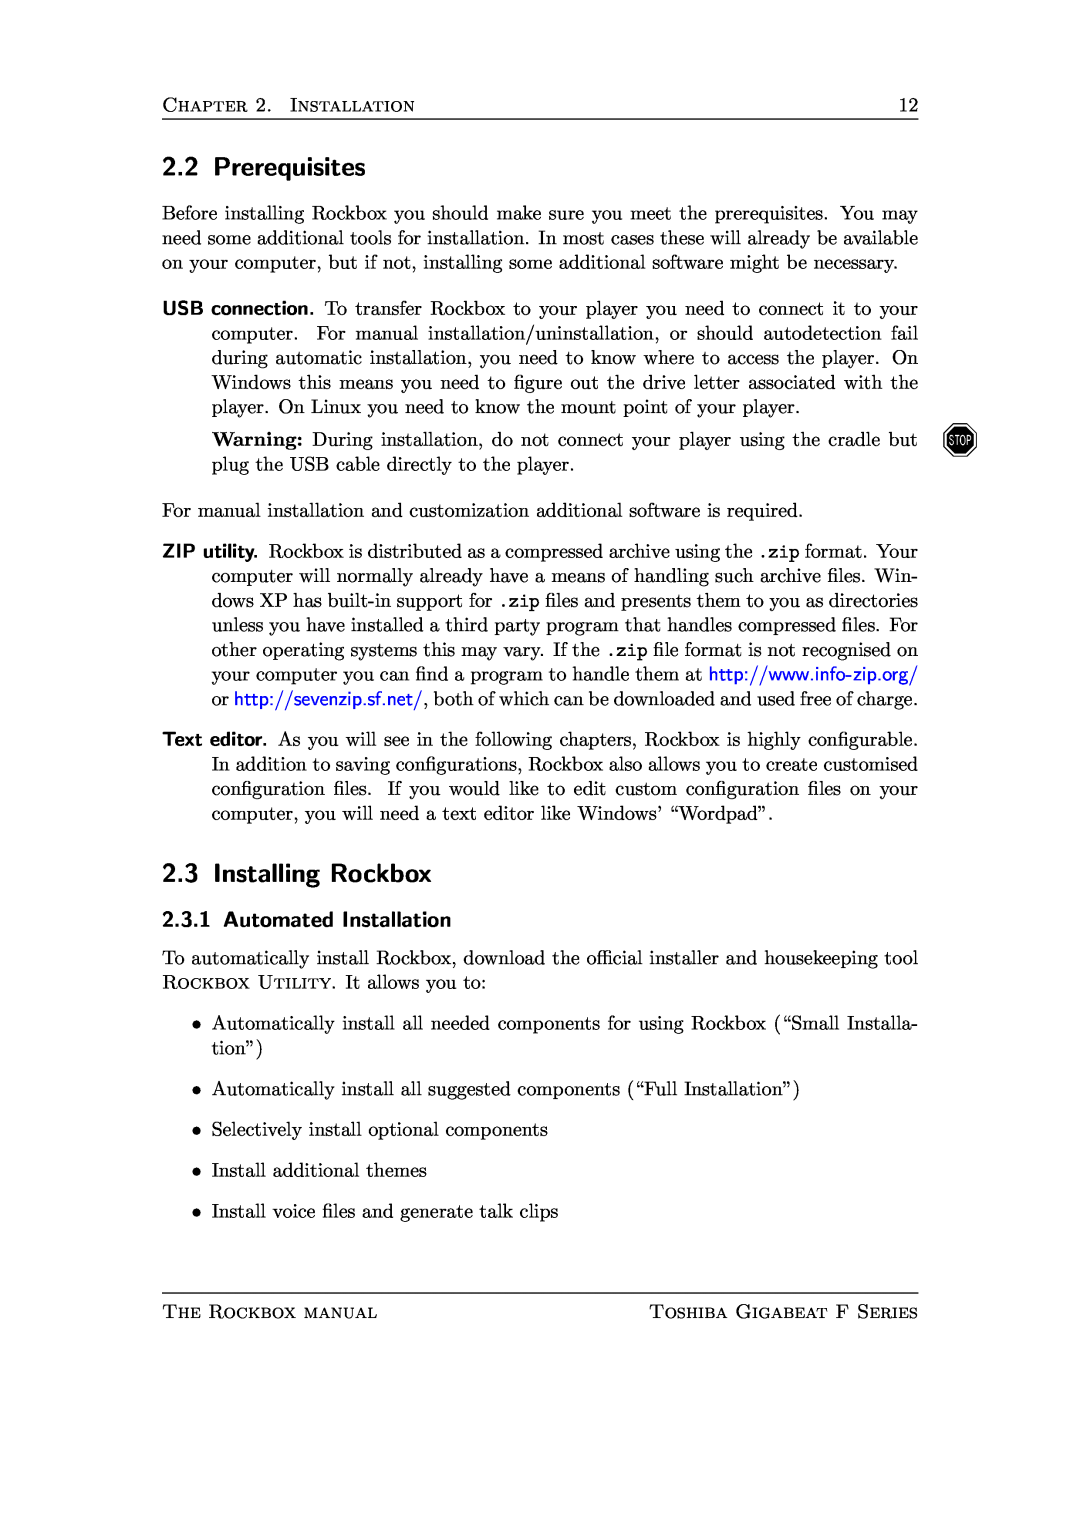 Toshiba F Series manual Prerequisites, Installing Rockbox, 2.3.1, Automated Installation 